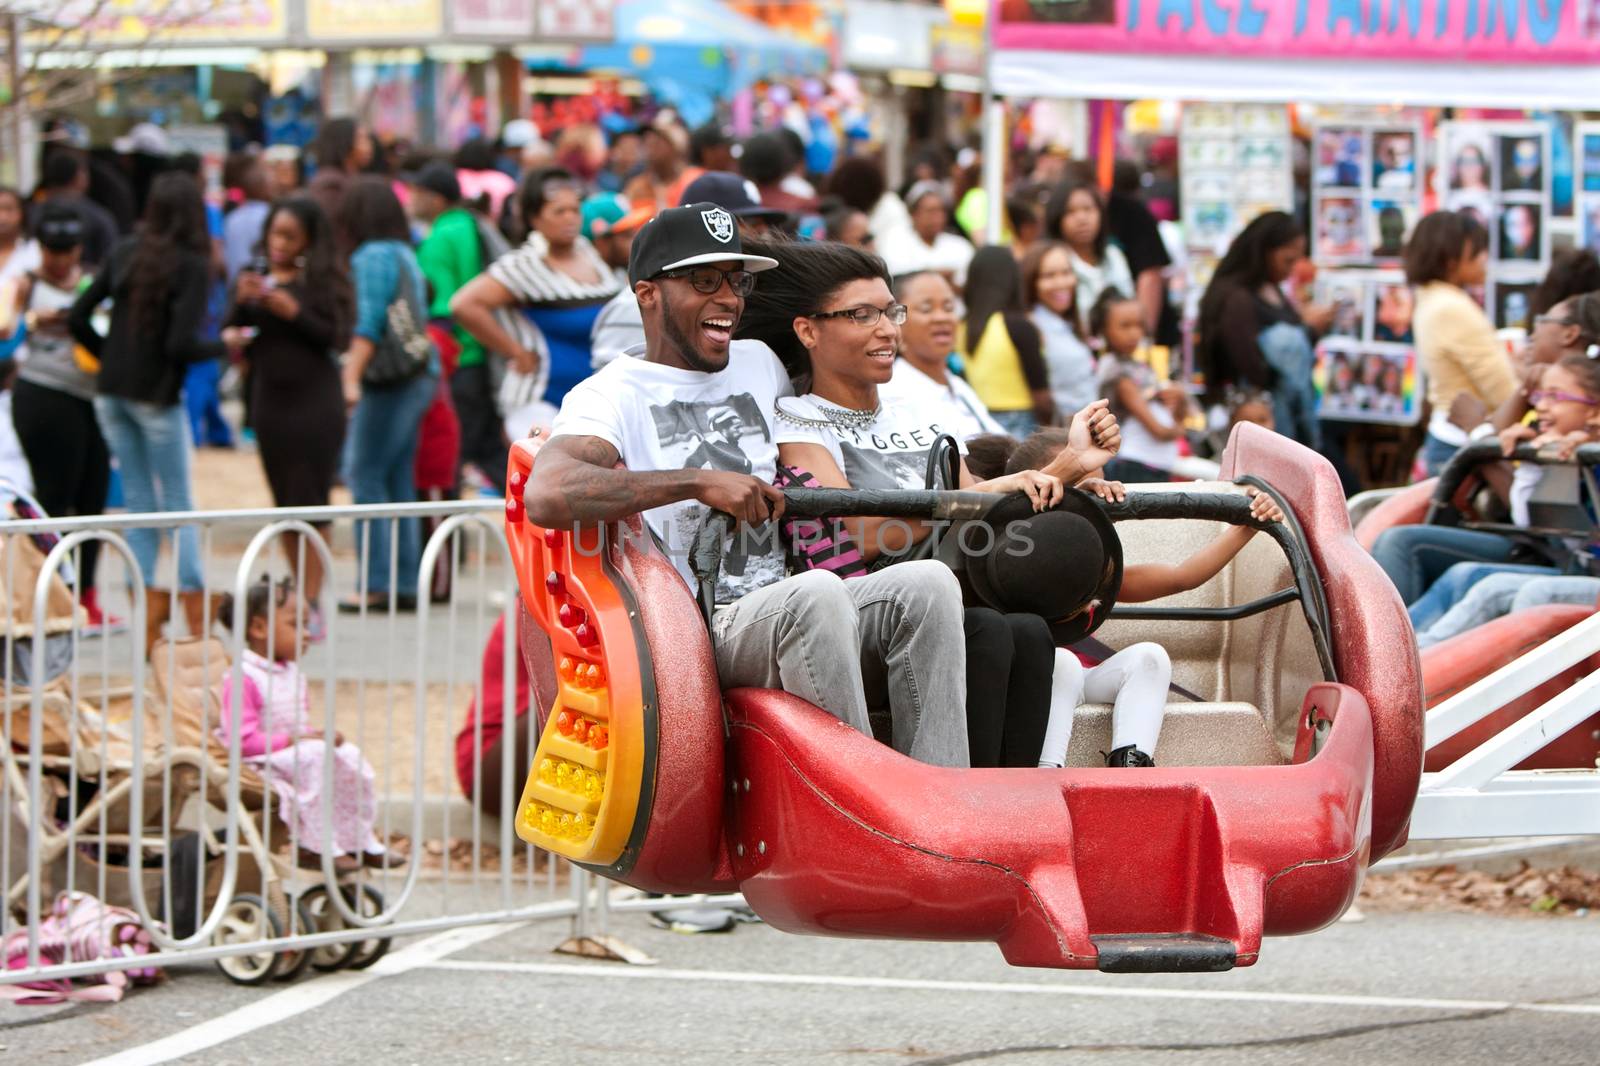 Family Rides Scrambler Carnival Ride At Atlanta Fair by BluIz60